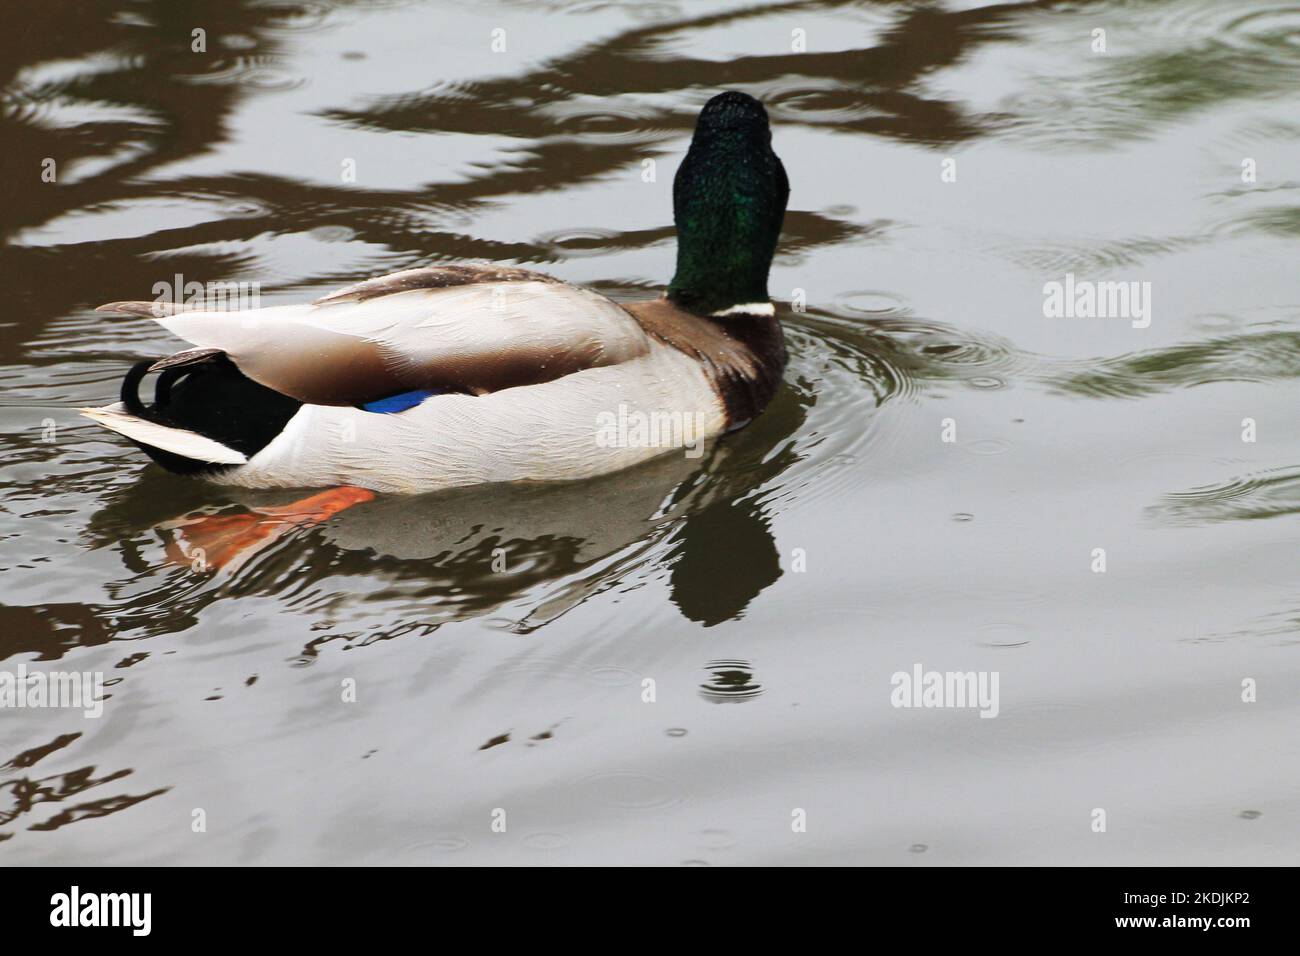 Pato de pesca fotografías e imágenes de alta resolución - Alamy